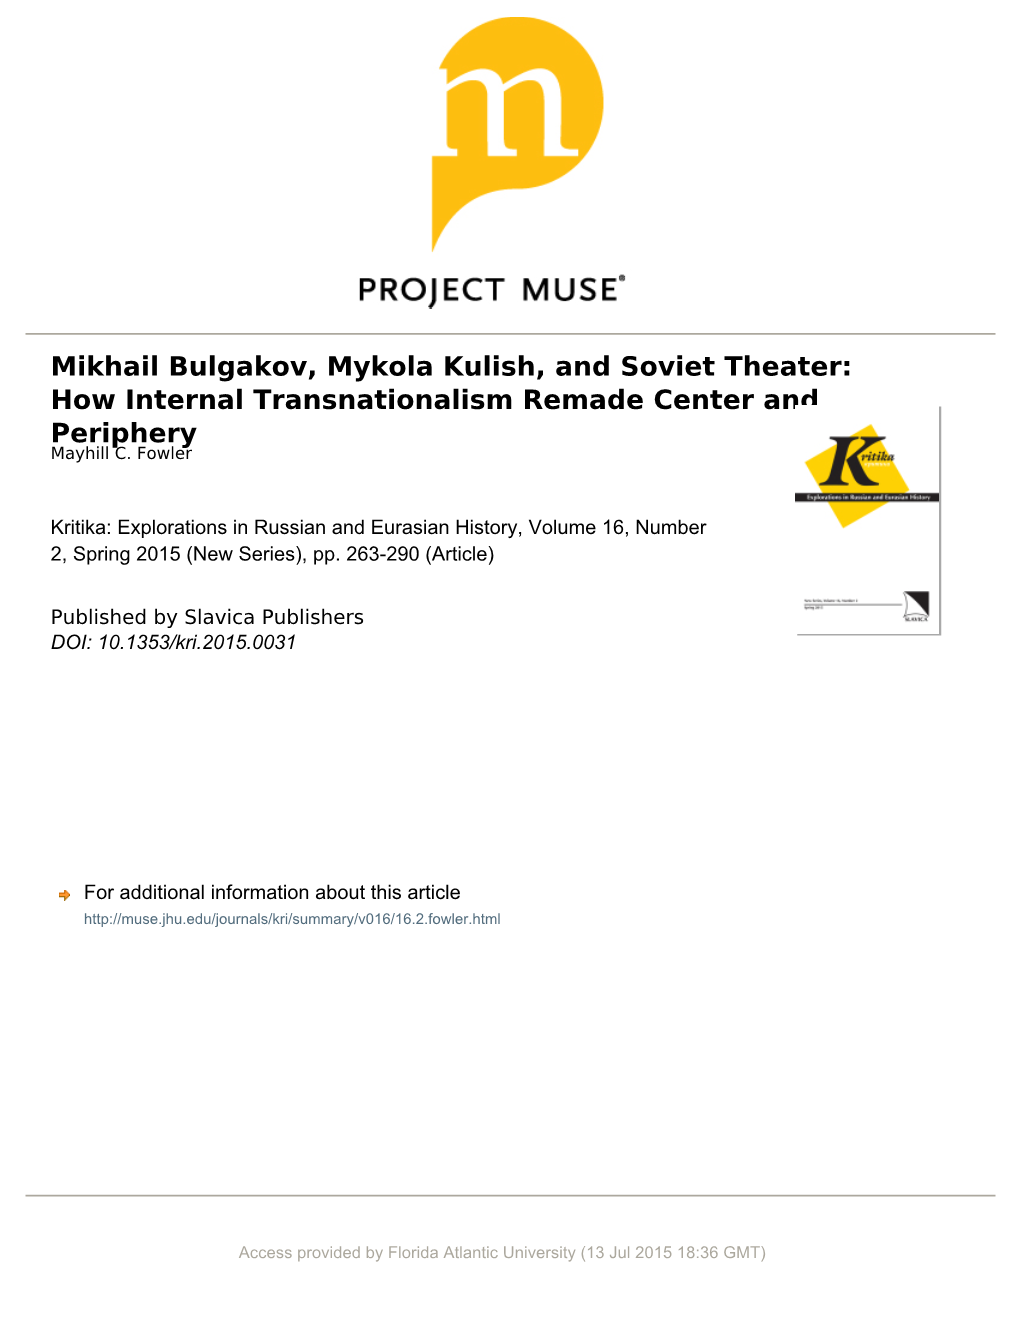 Mikhail Bulgakov, Mykola Kulish, and Soviet Theater: How Internal